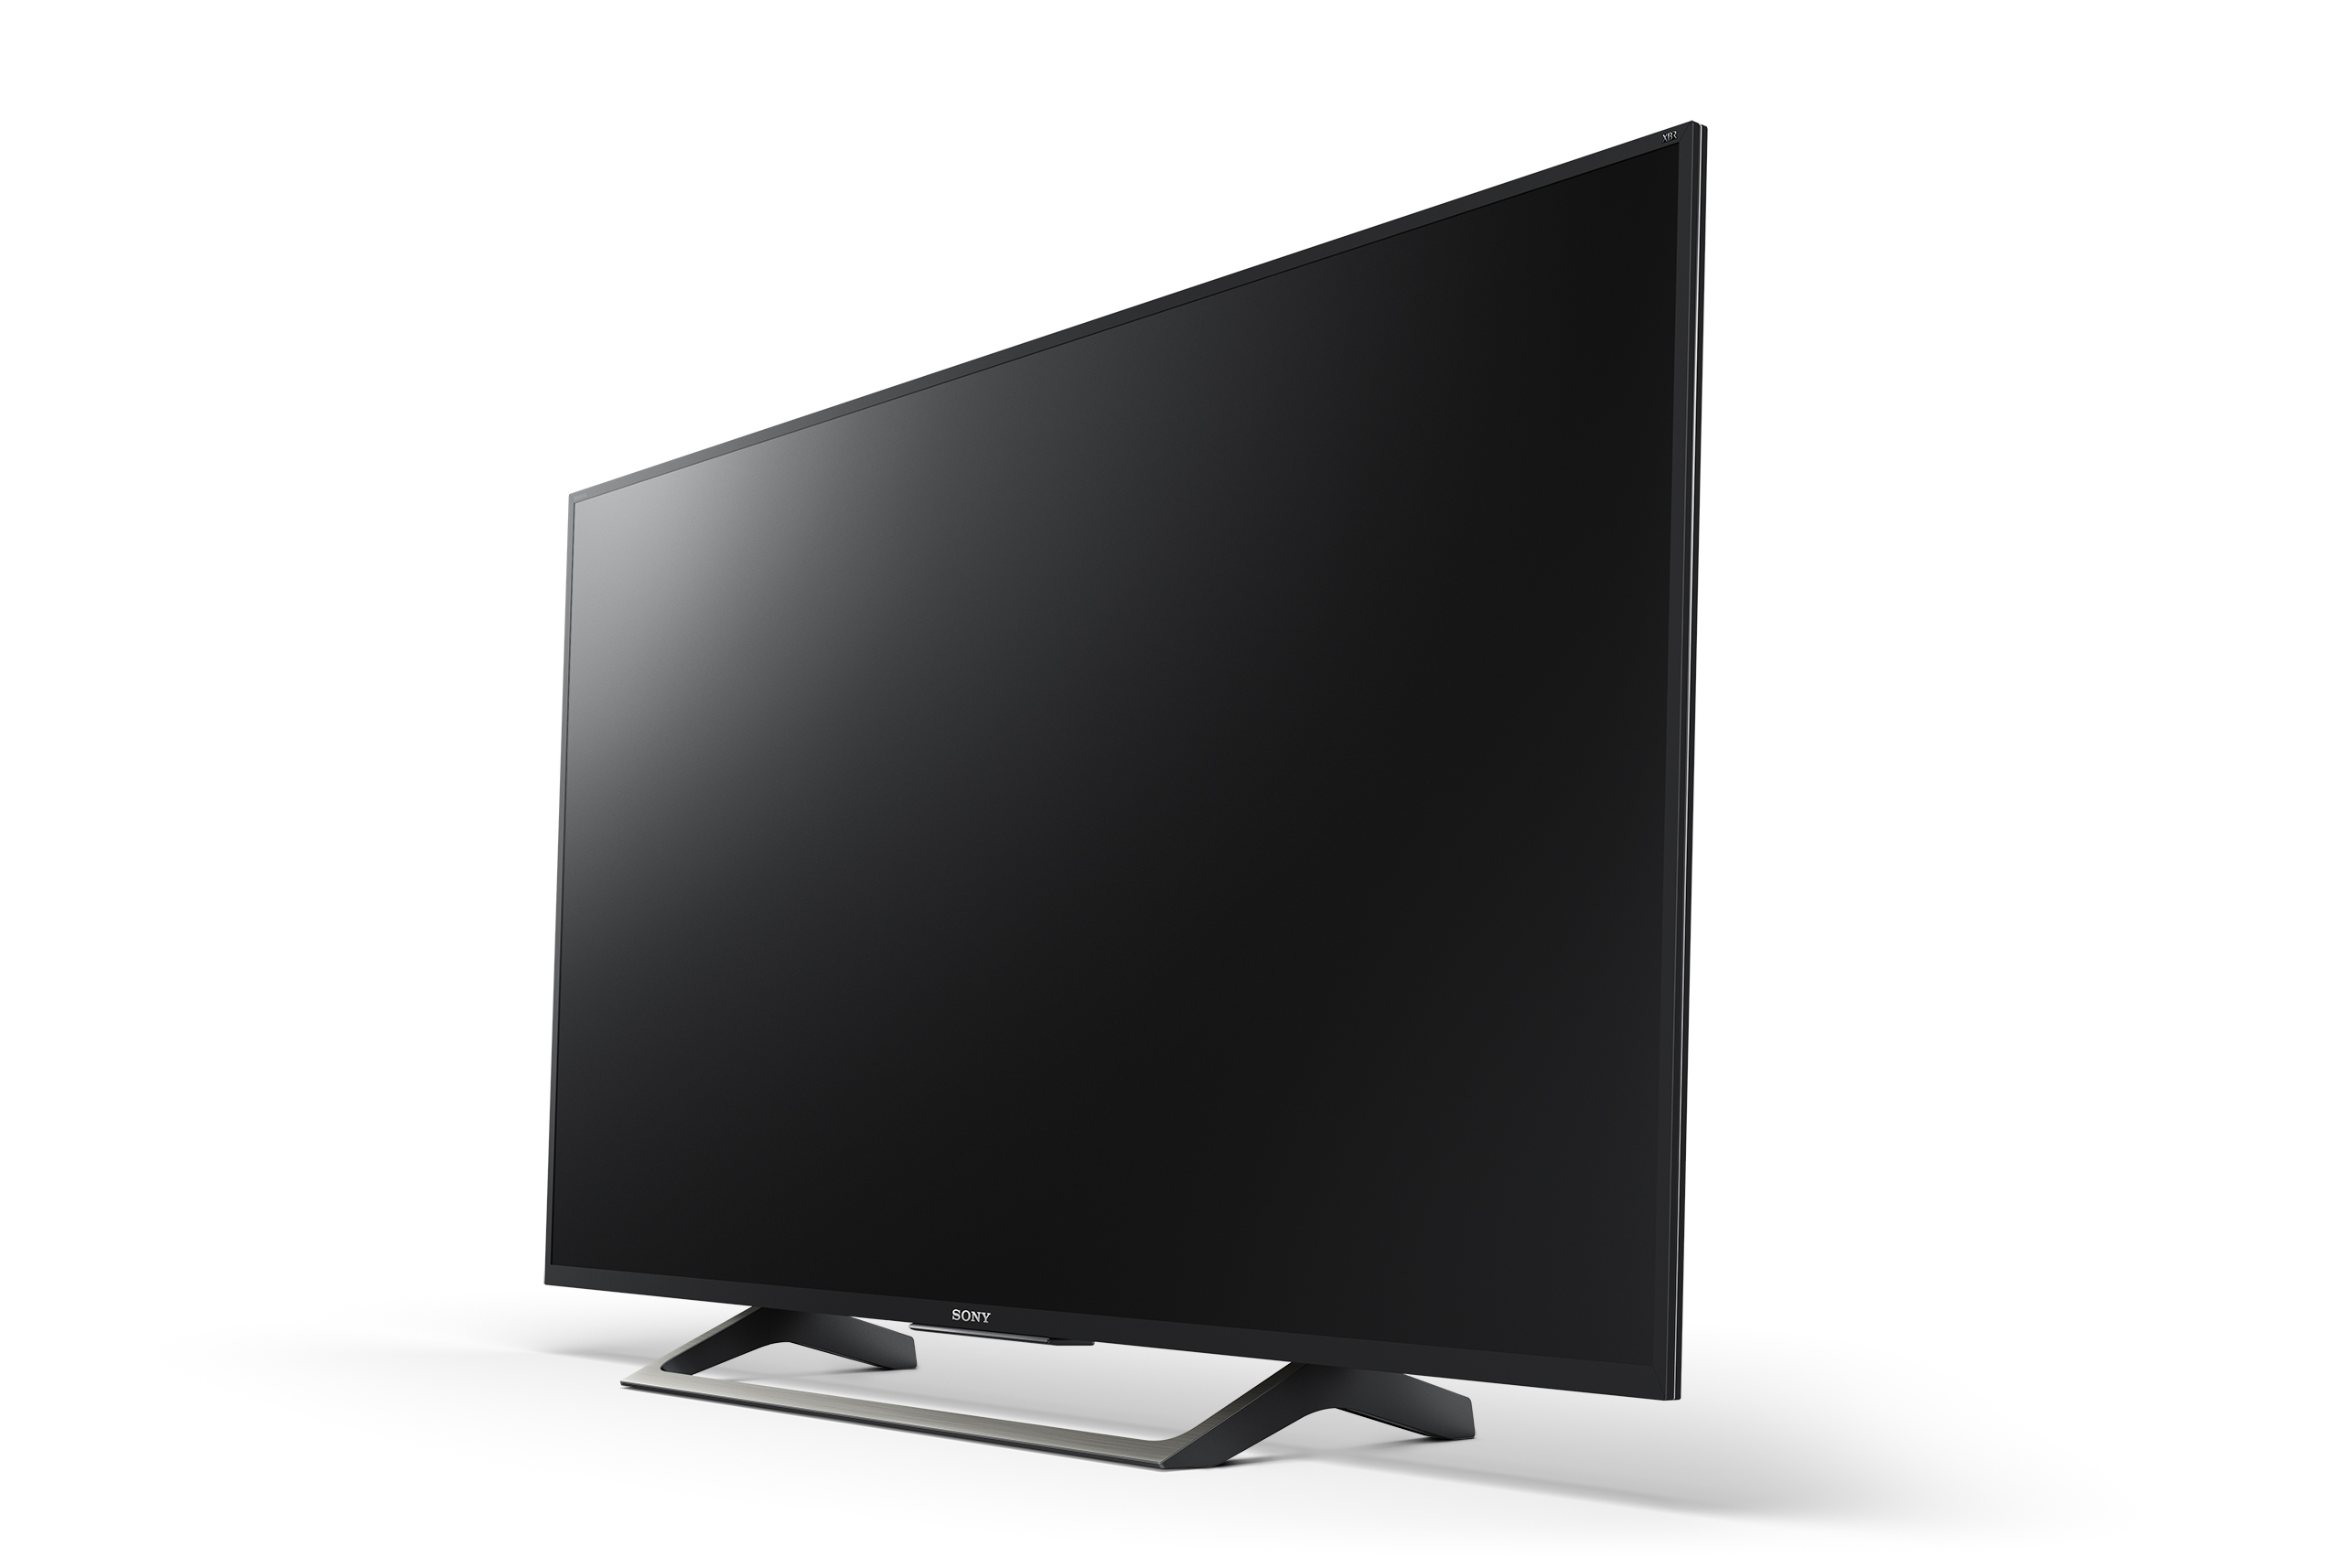 Sony 55" Class 4K (2160P) Smart LED TV (XBR55X800E) - image 5 of 14